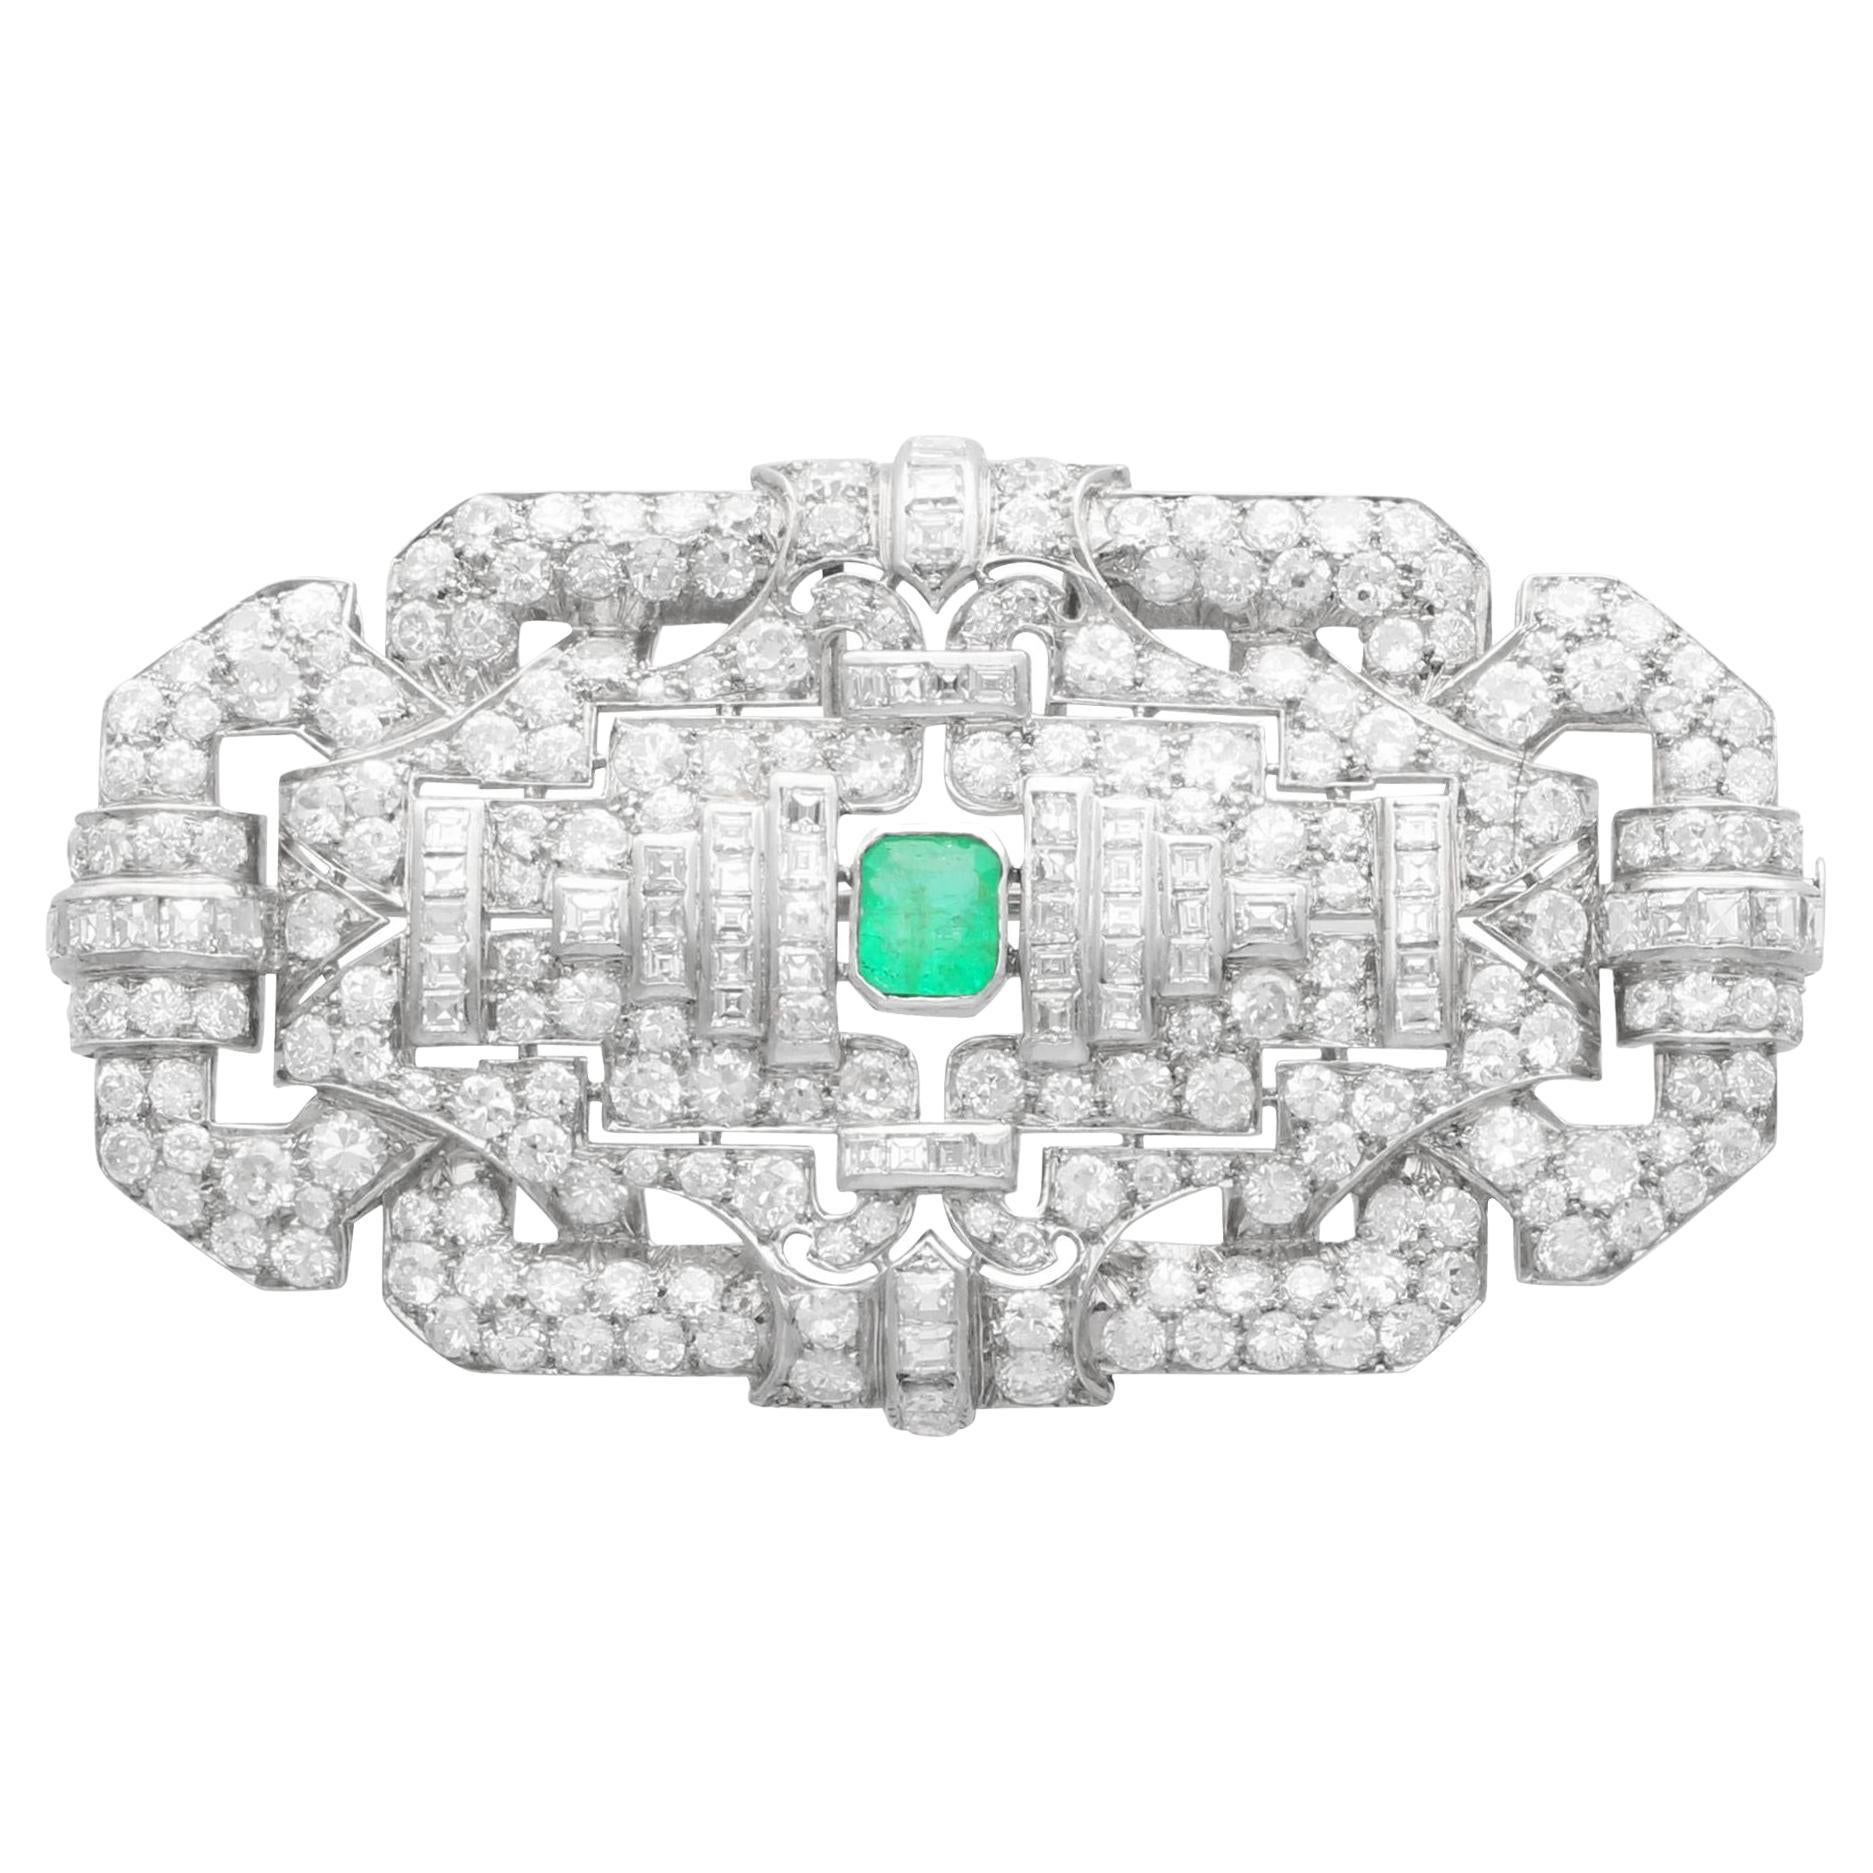 Antique Art Deco 1.02 Carat Emerald and 11.88 Carat Diamond Platinum Brooch